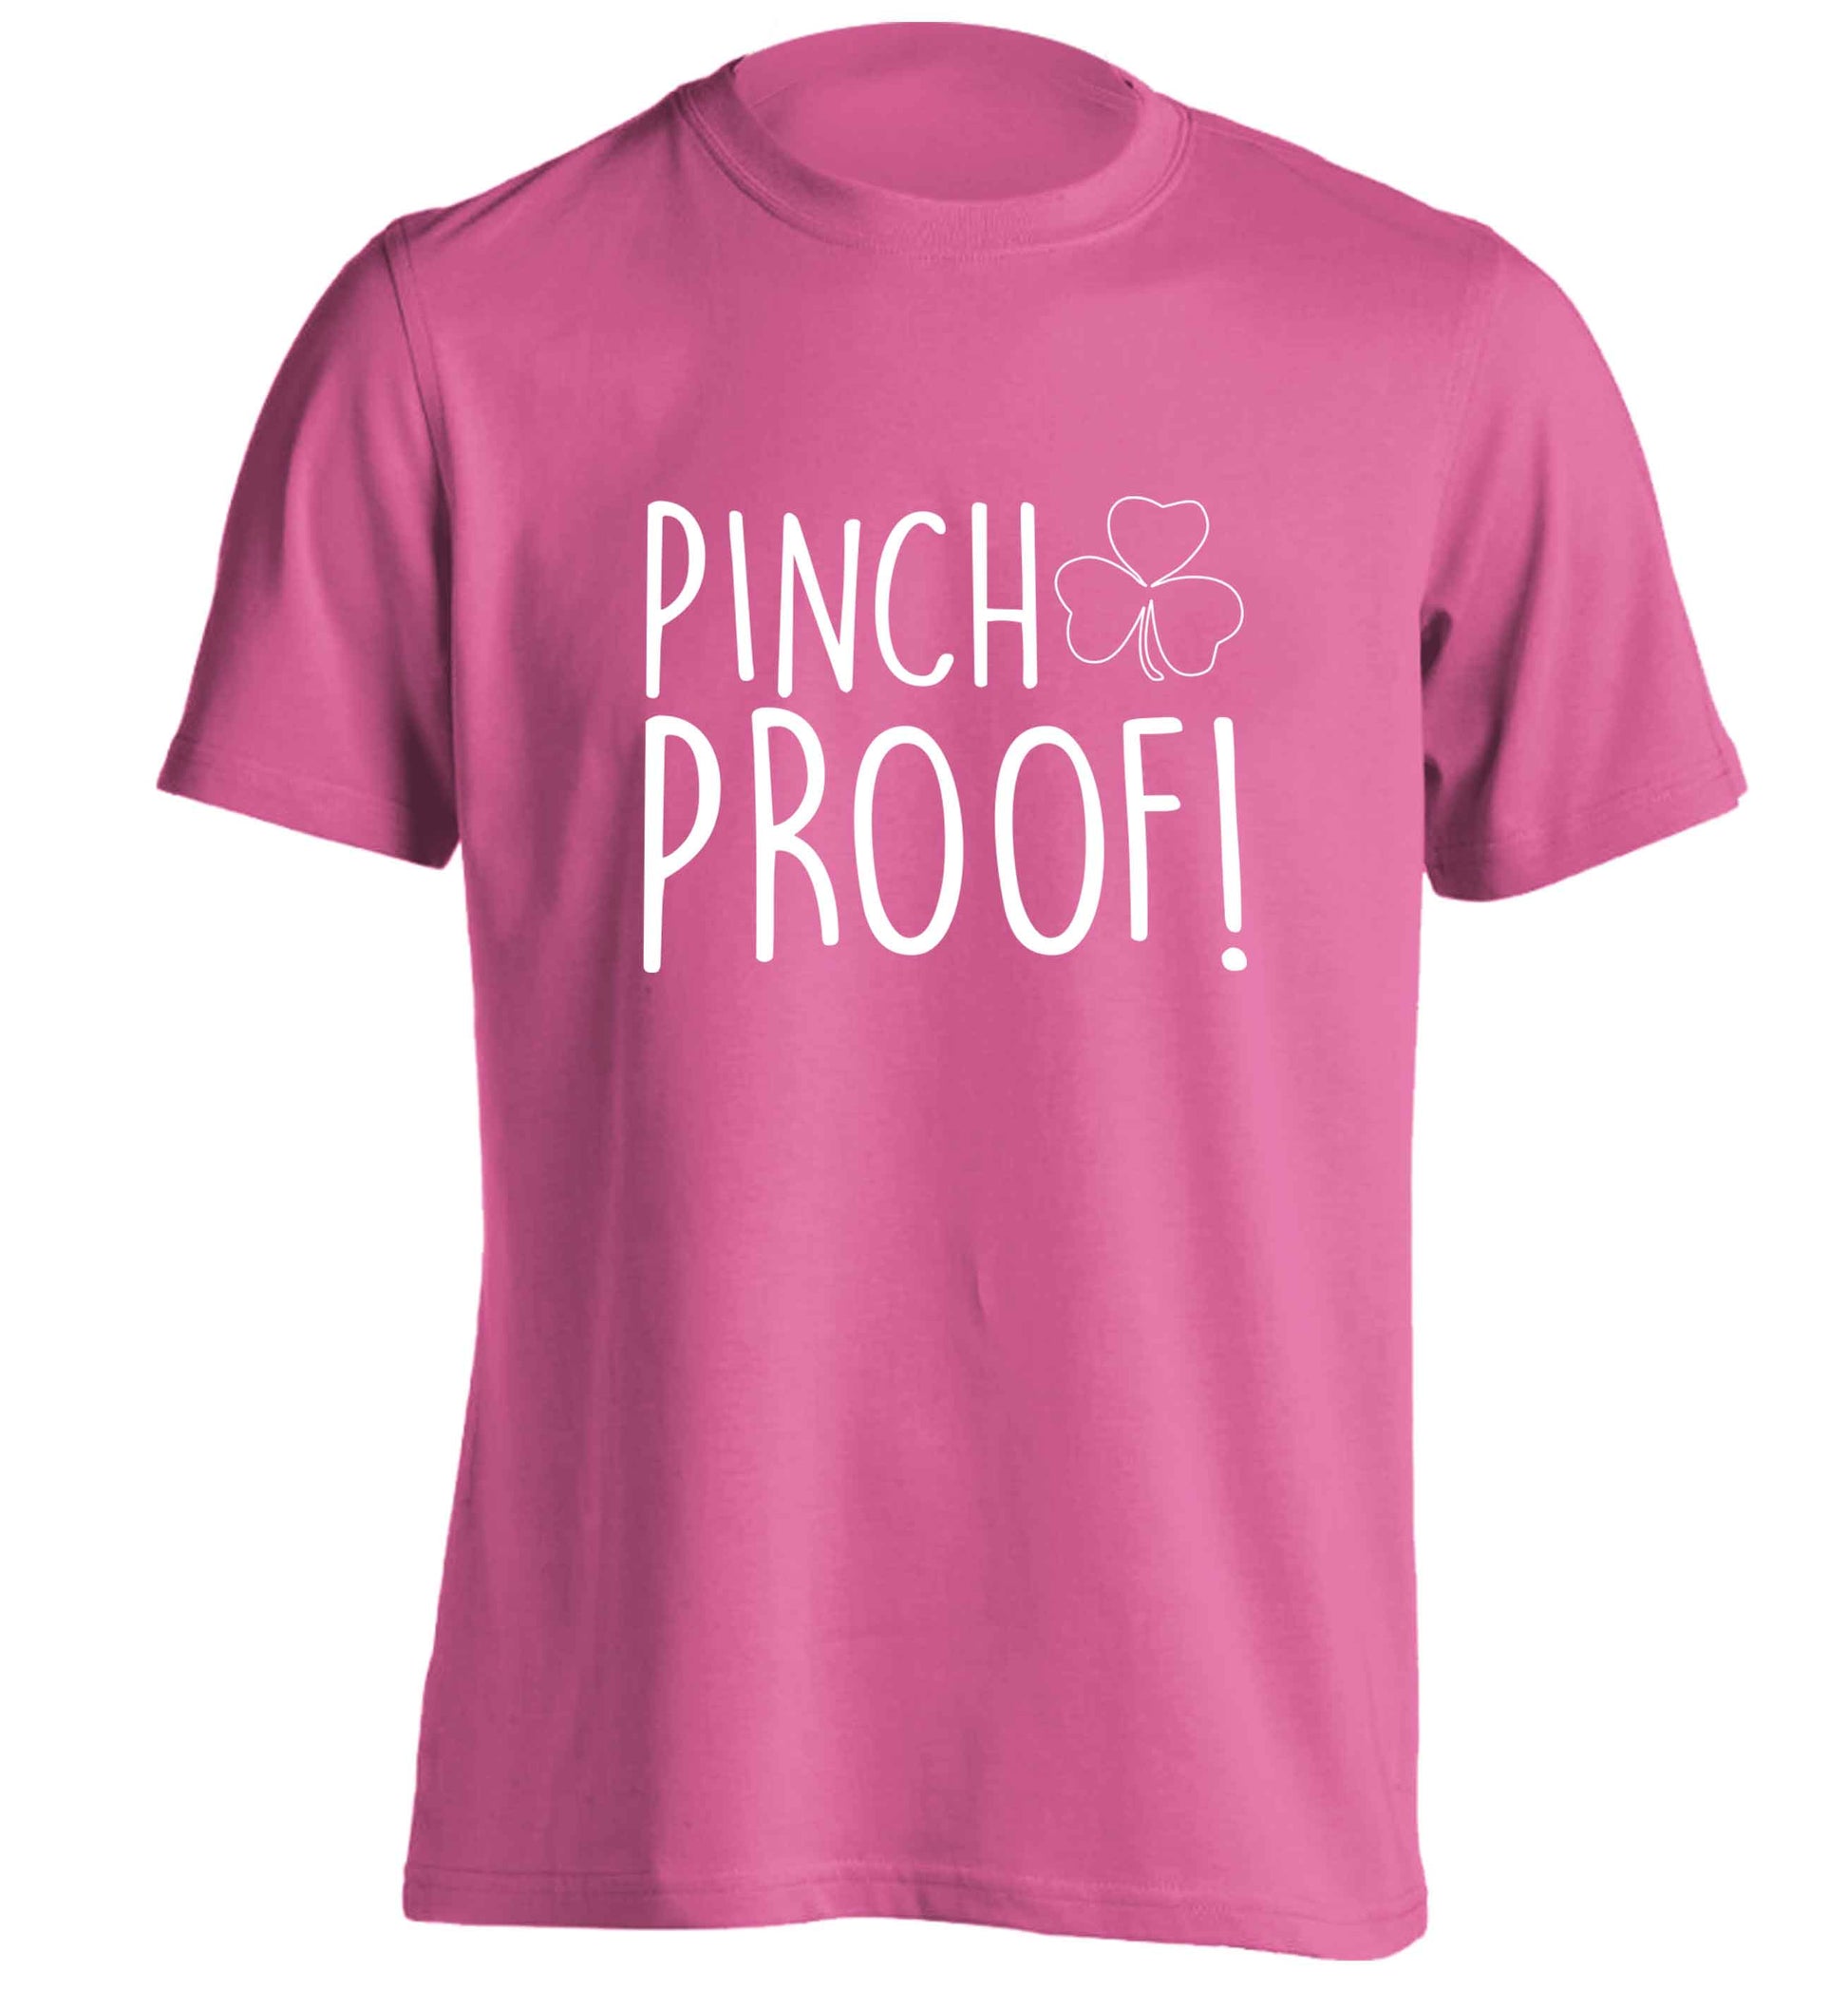 Pinch Proof adults unisex pink Tshirt 2XL